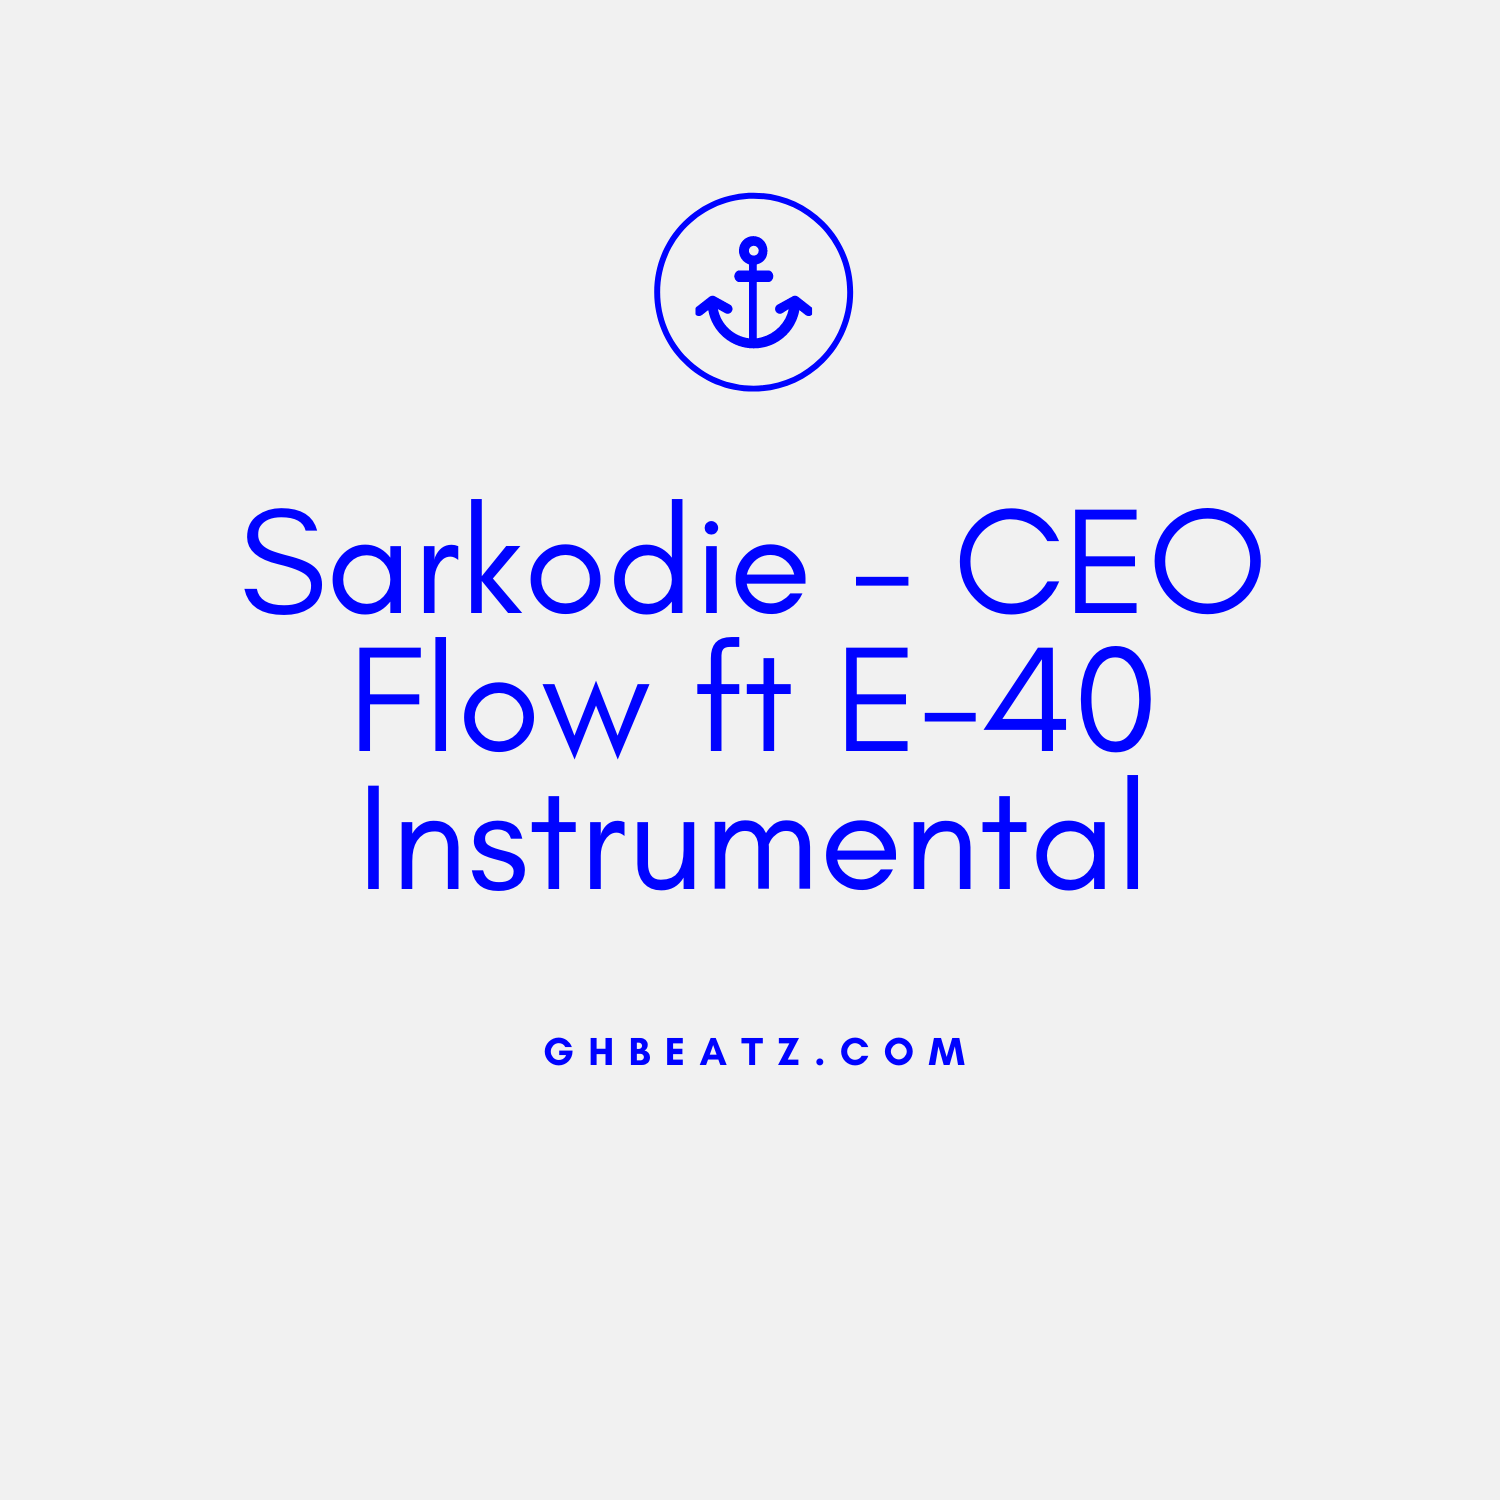 Sarkodie – CEO Flow ft E-40 Instrumental